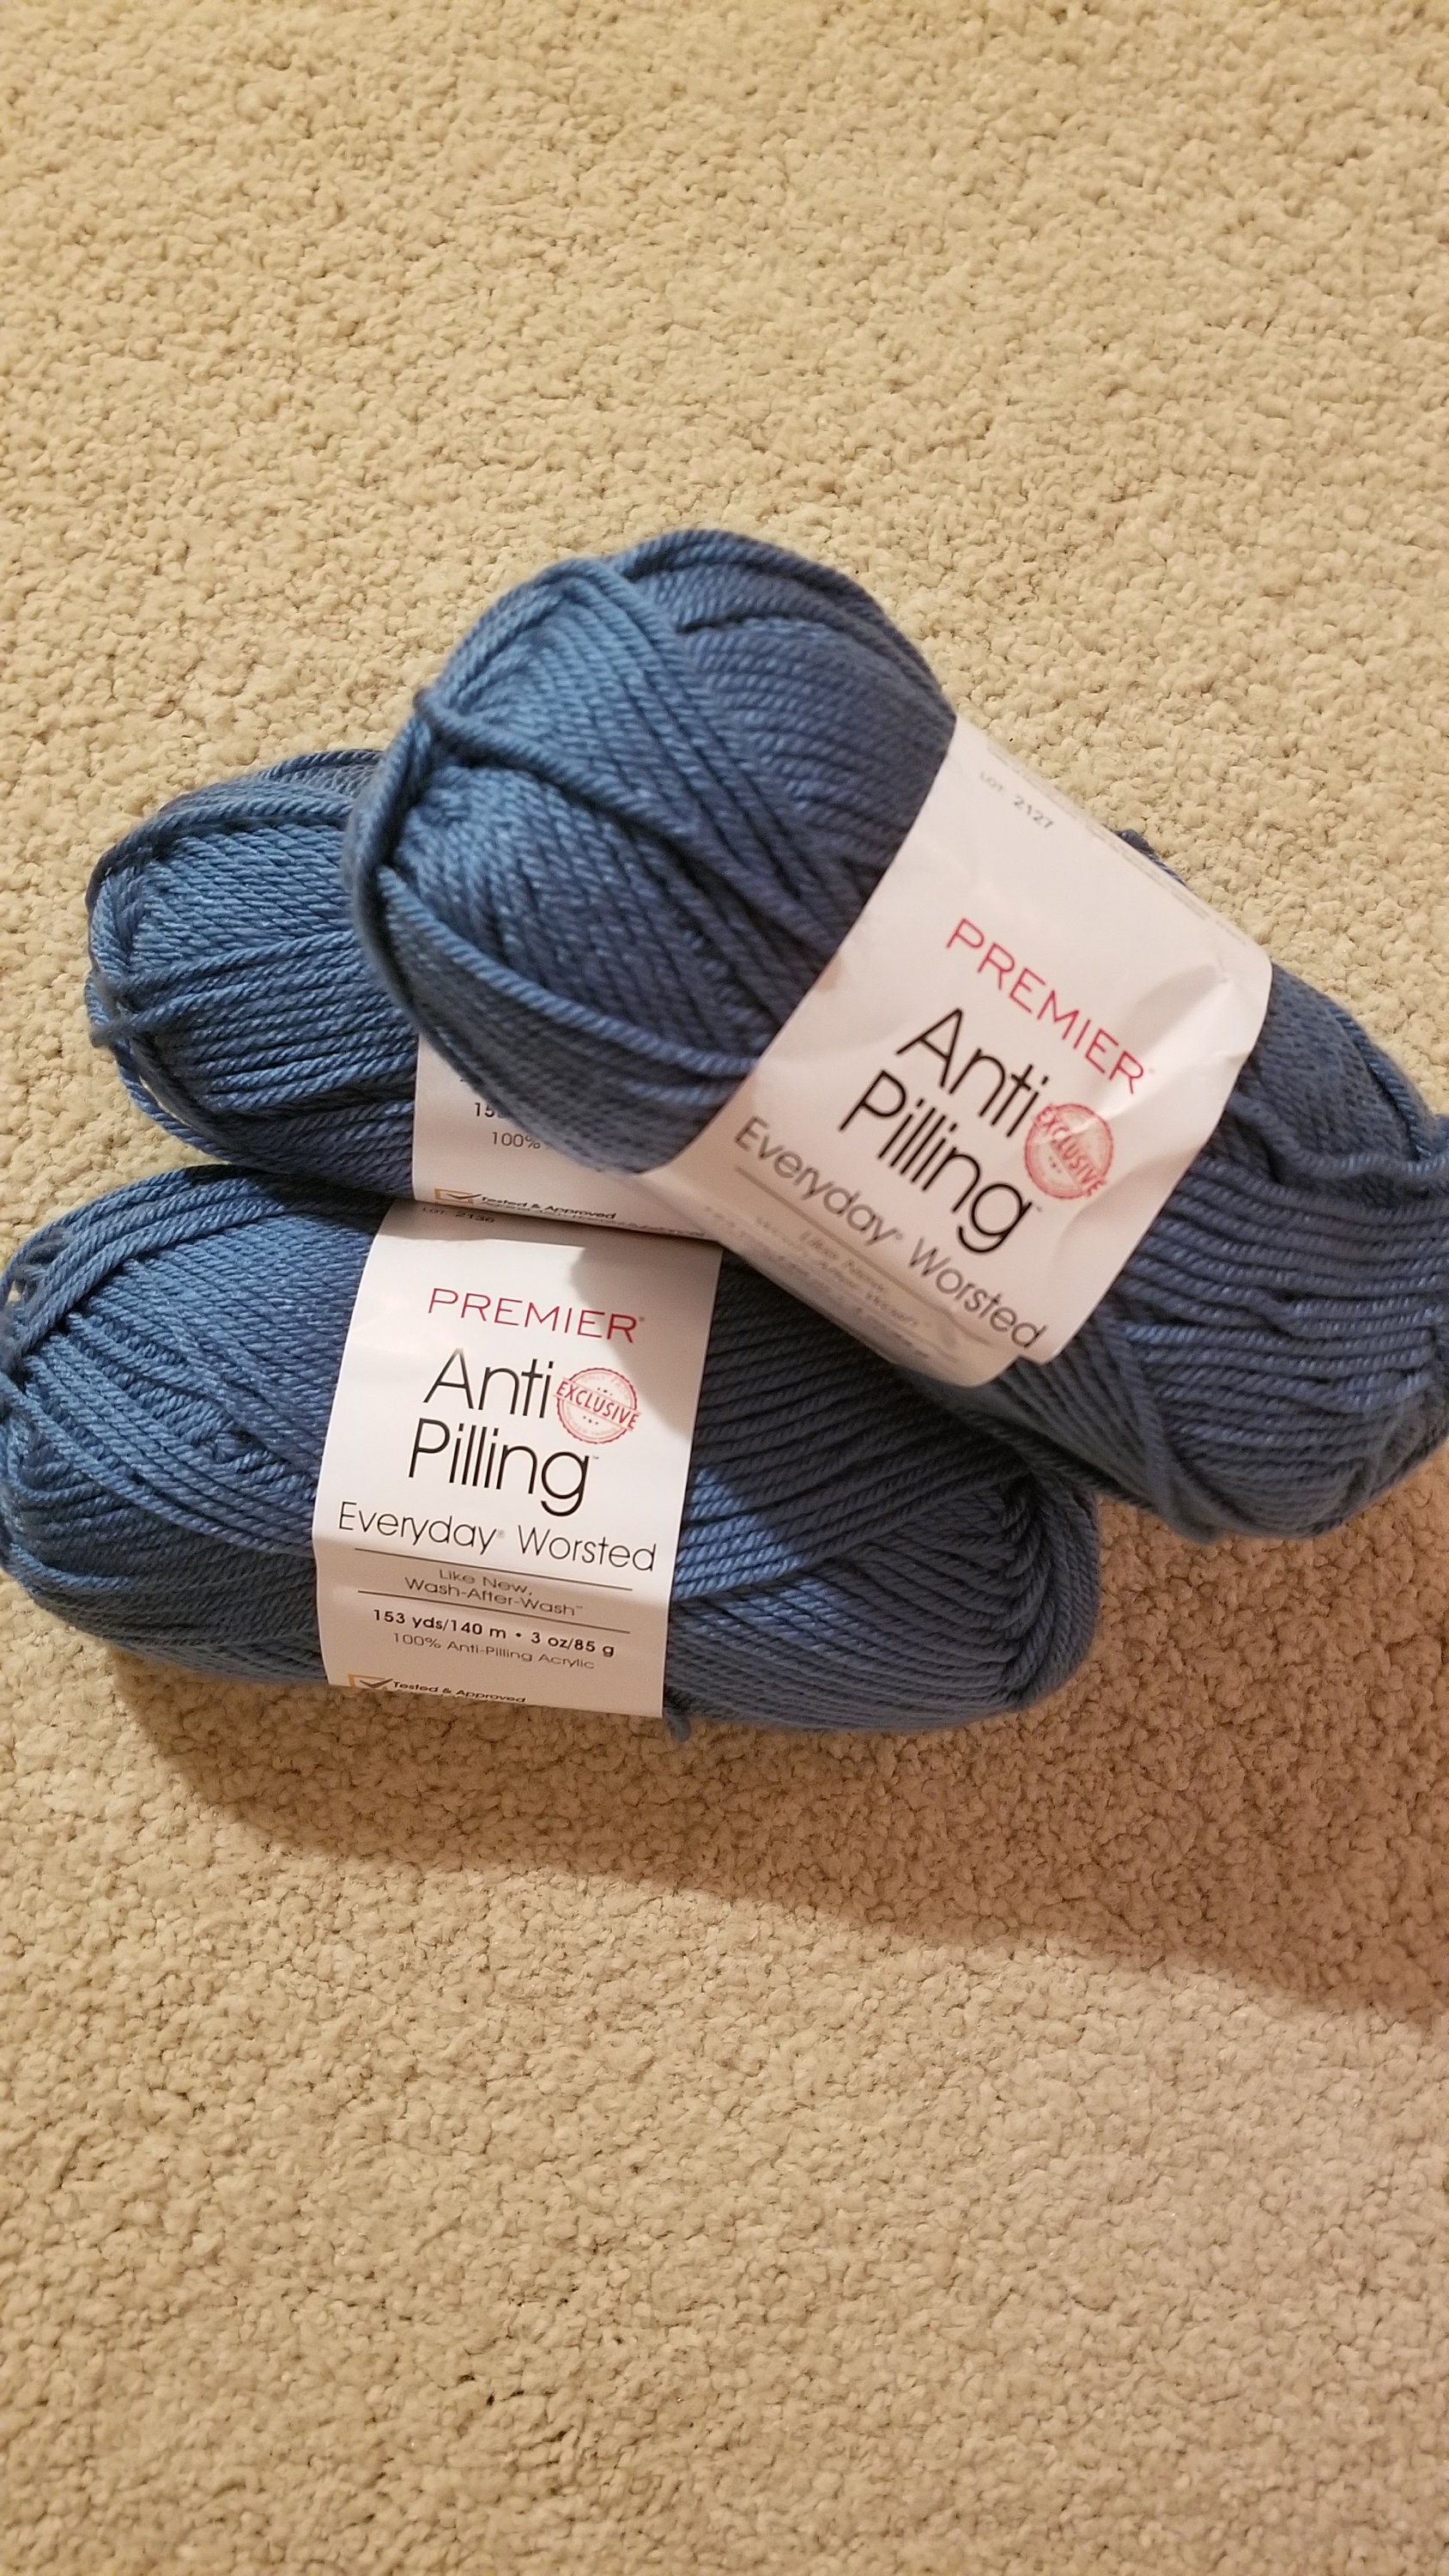 Knit Picks Dishie Worsted Cotton Yarn - 3.5 oz (Pebble)